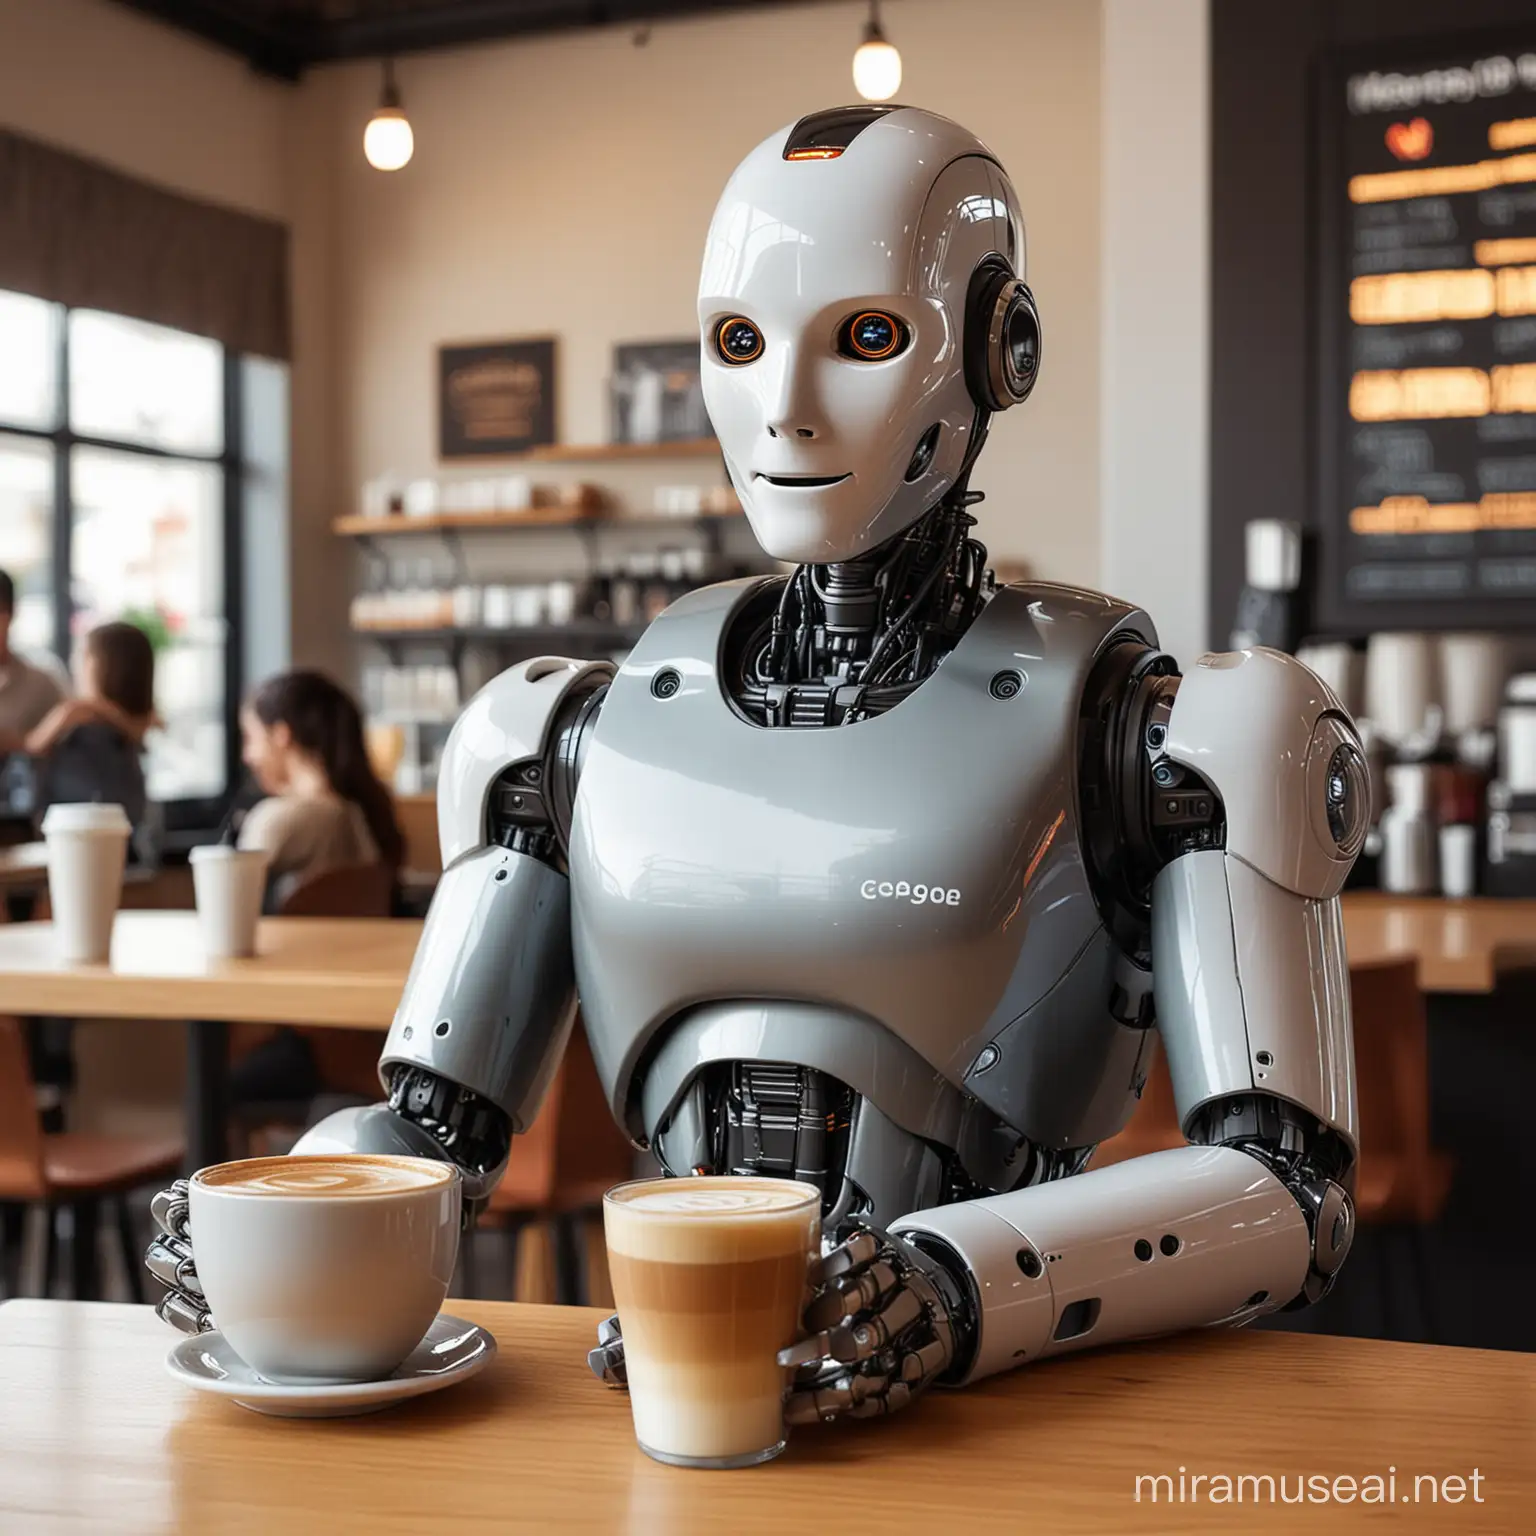 Modern Robot Barista Blending Coffee in Stylish Coffee Shop